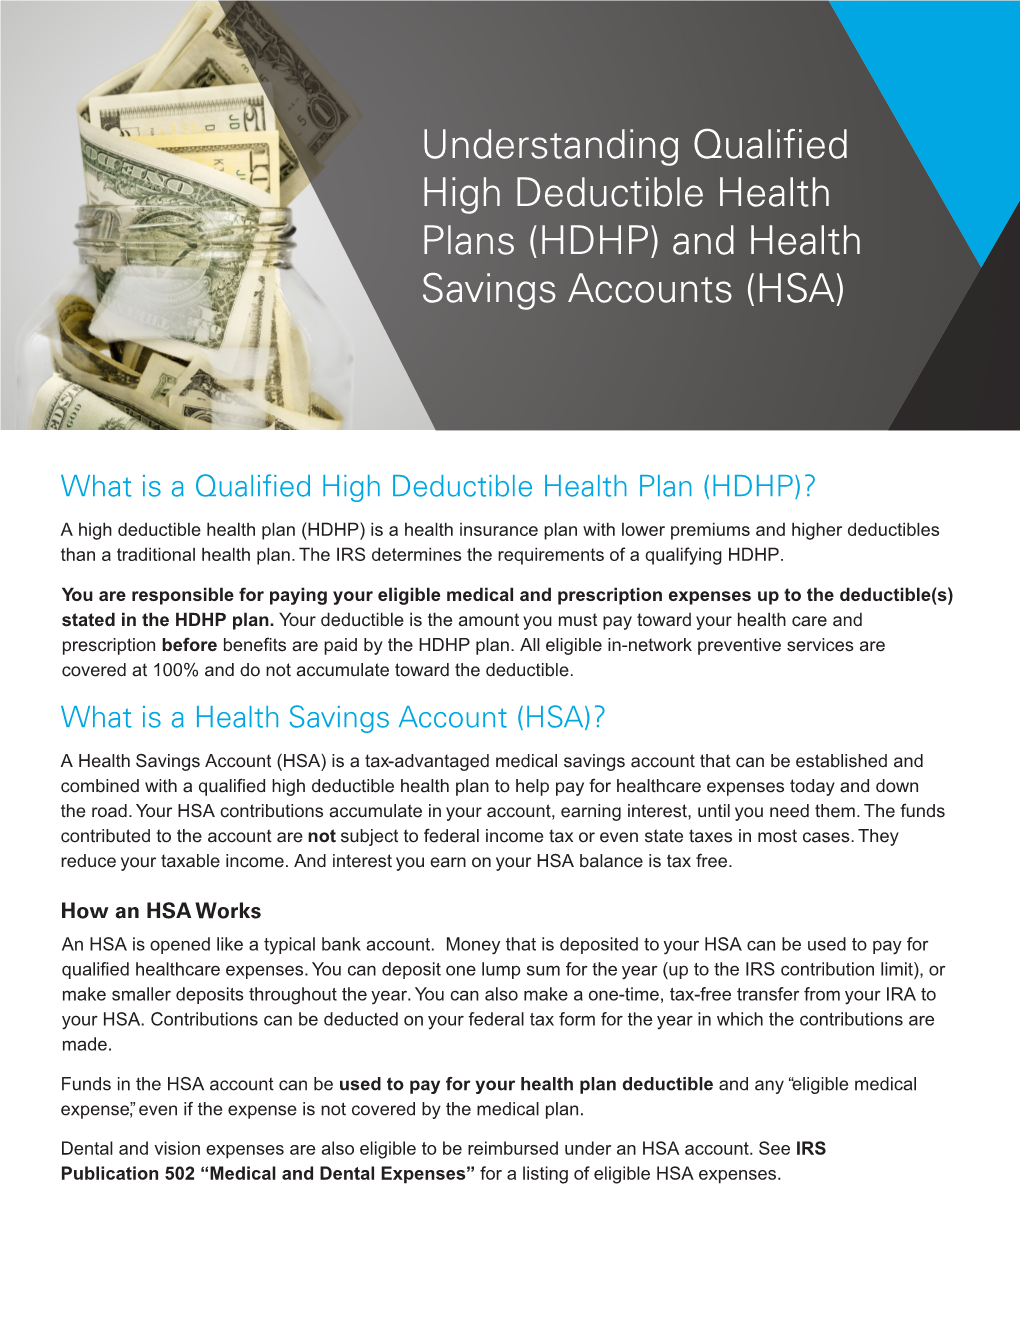 HDHP) and Health Savings Accounts (HSA